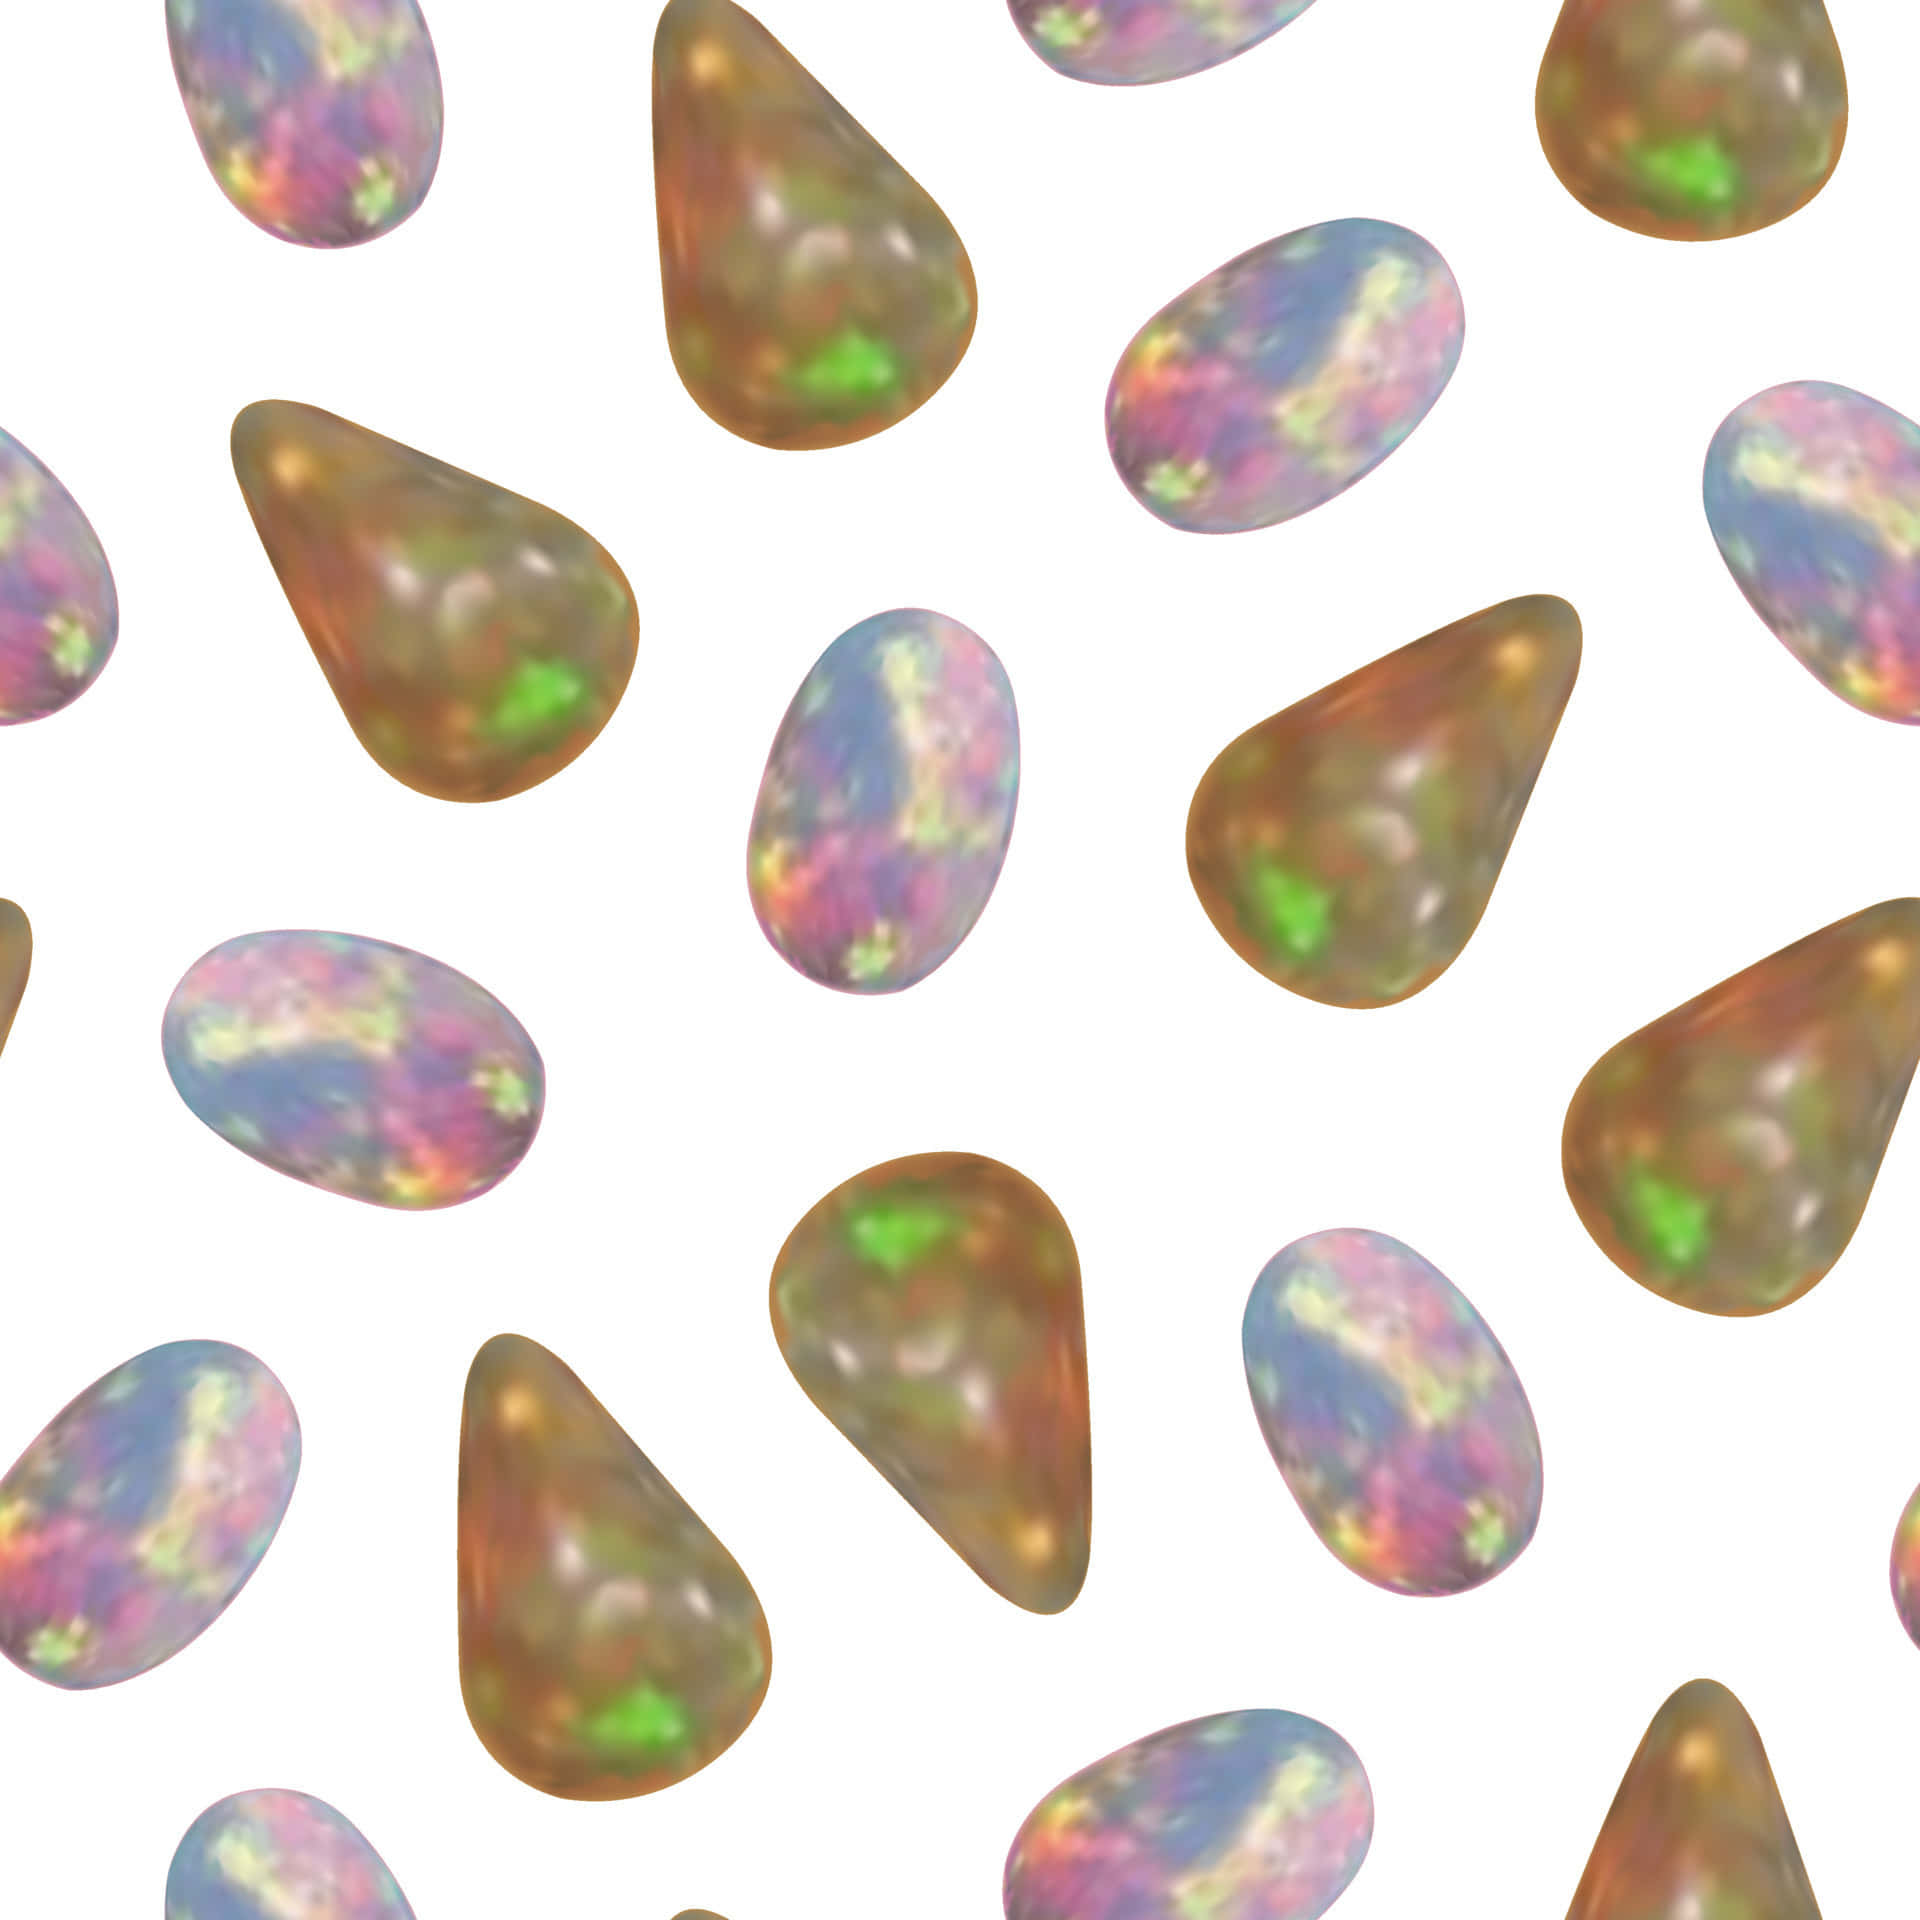 Shiny Opal Gemstone Digital Art Wallpaper